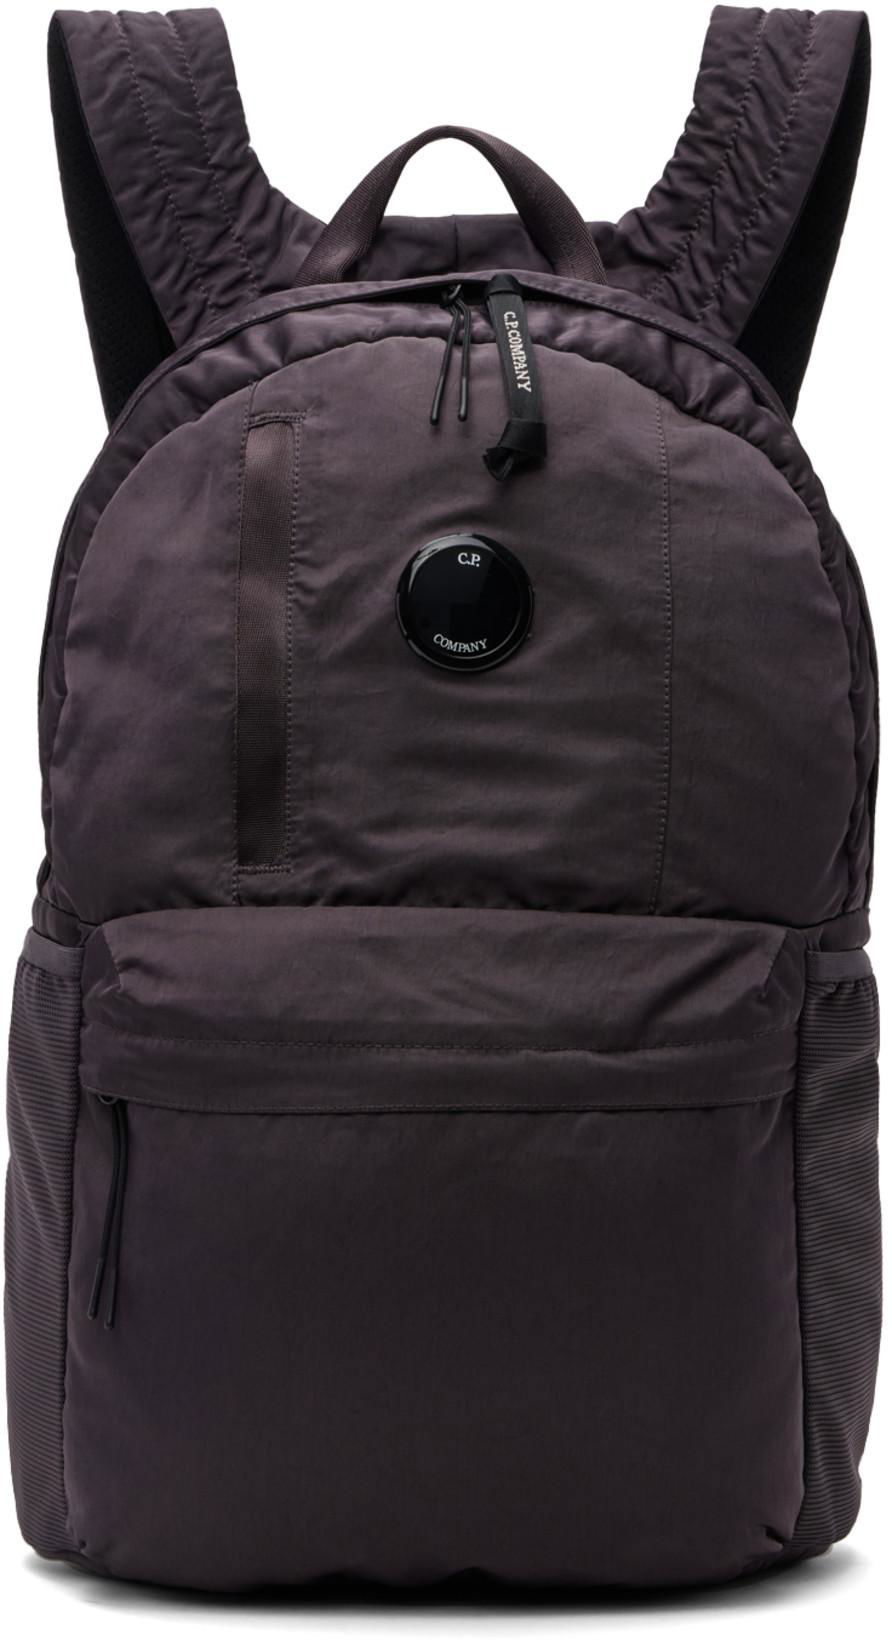 Purple Nylon B Backpack by C.P. COMPANY